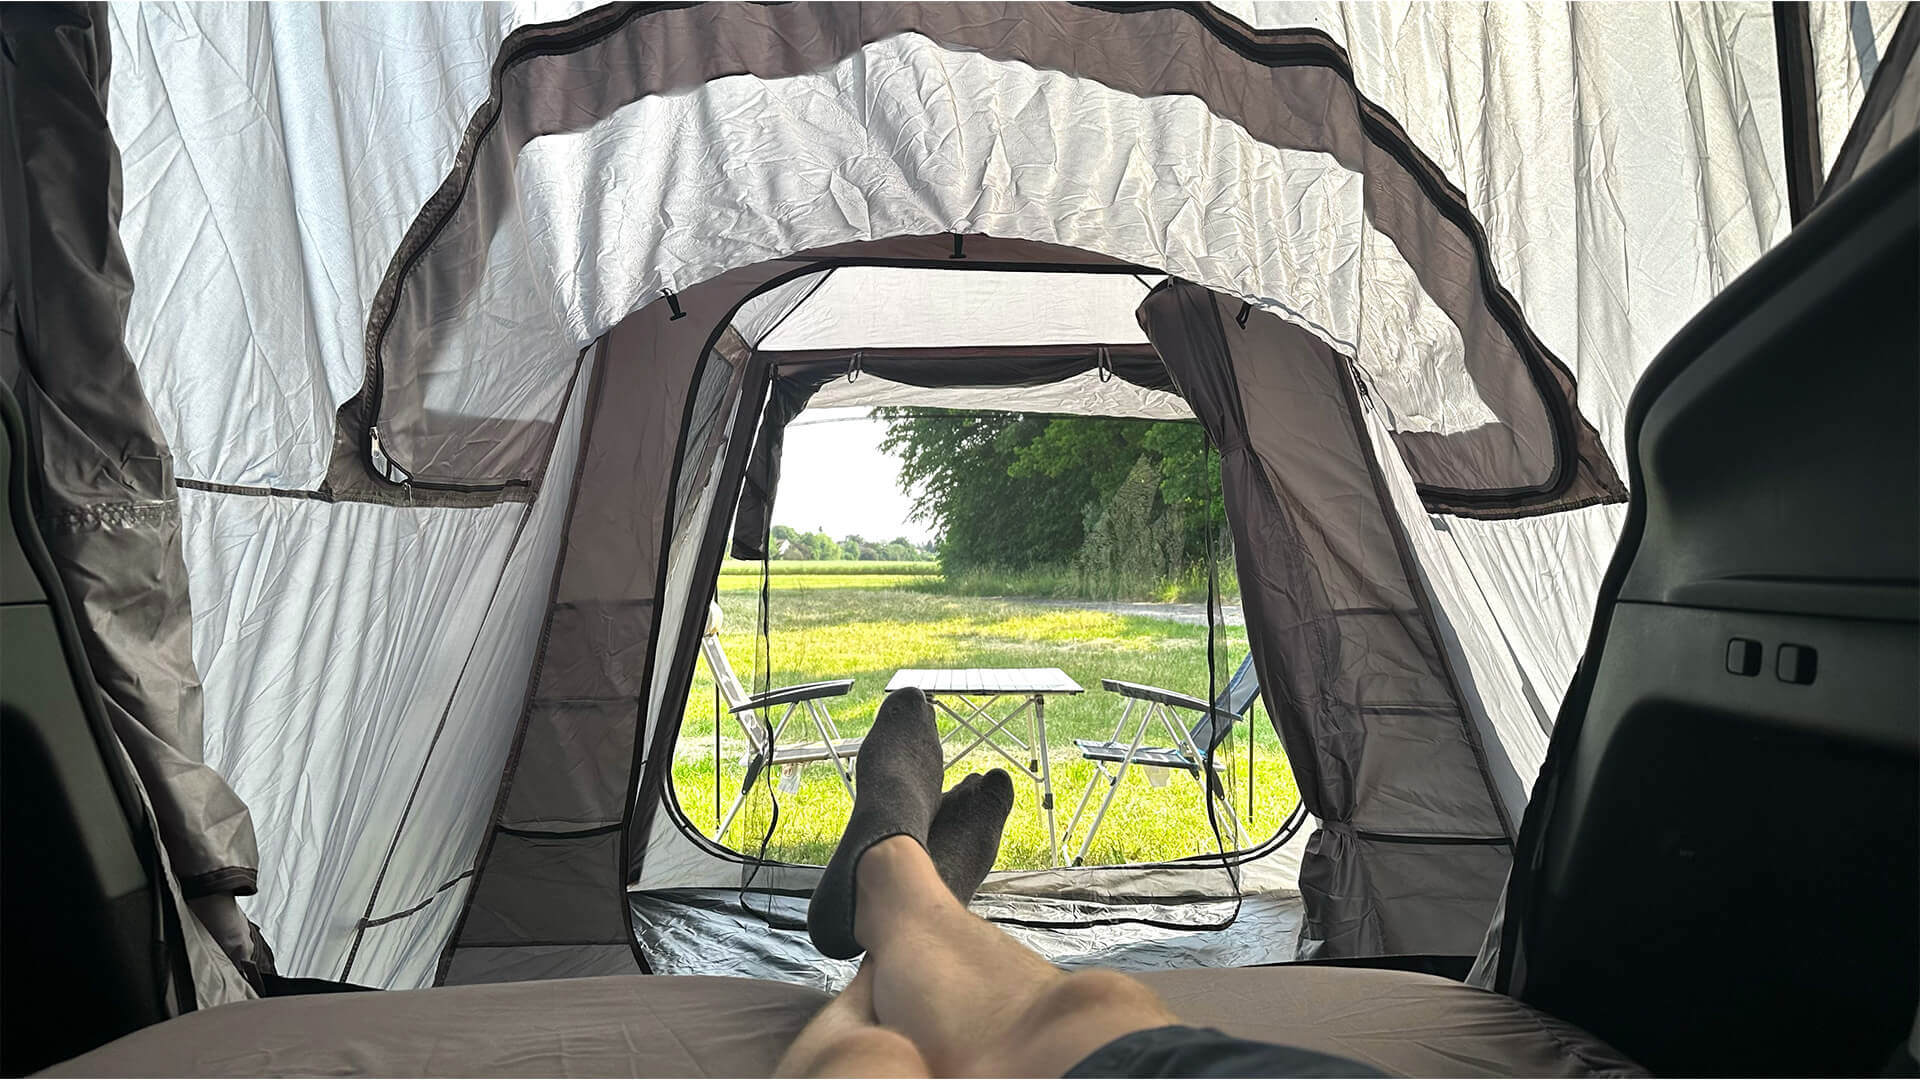 Model Y camping tent TEMORIES interior